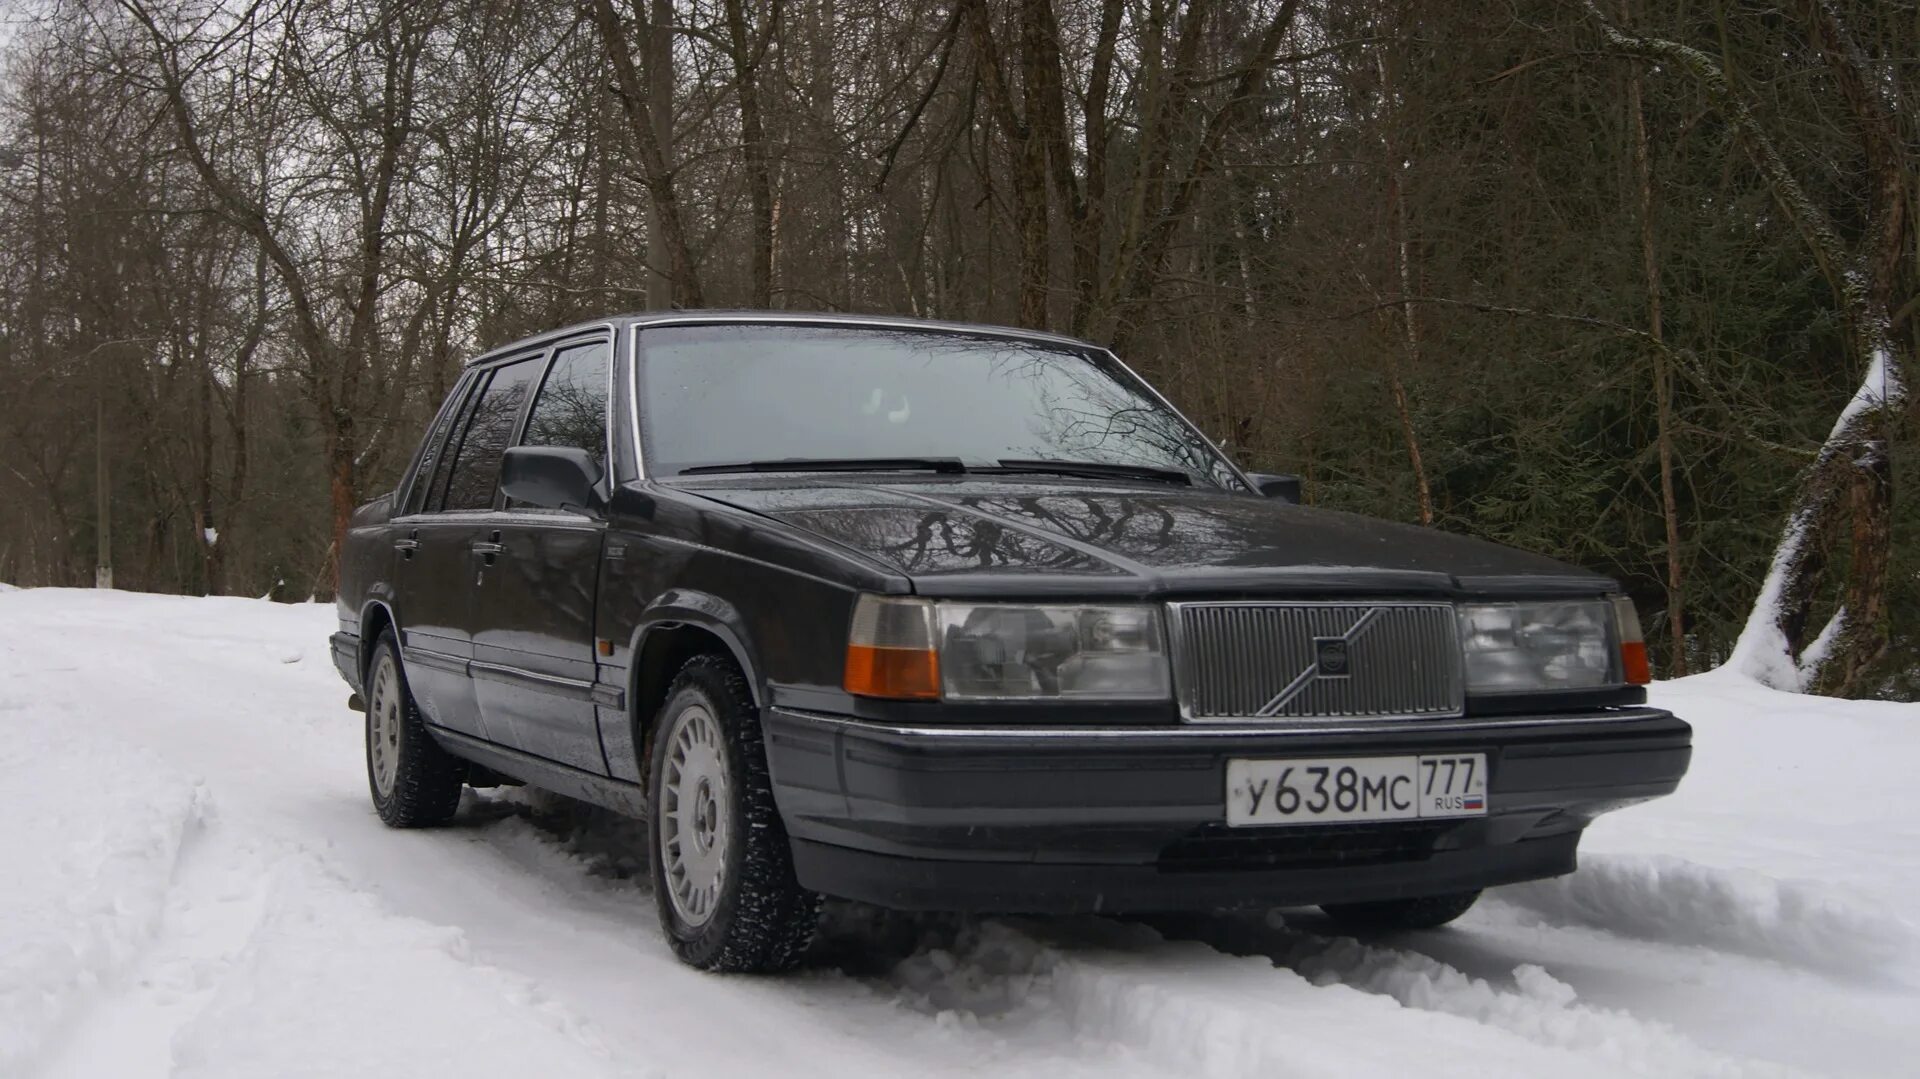 Volvo 760 Turbo 1992. Вольво 760. Volvo 760 1988 Facelift. Volvo 760 Estate 1988 Facelift. Дром алтайский край камень